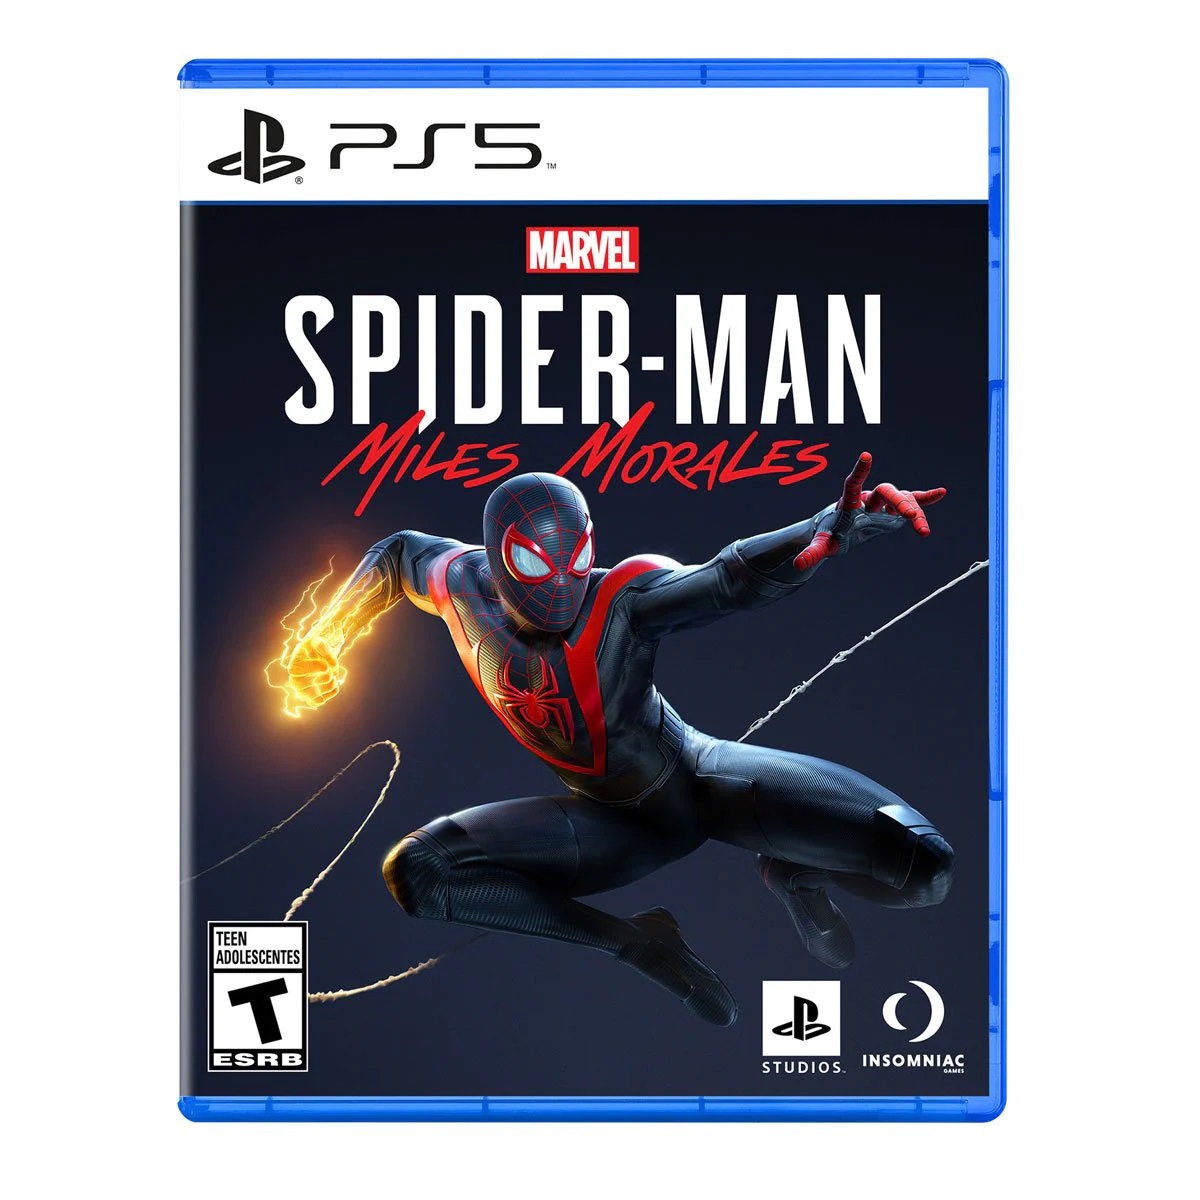 SPIDER-MAN: MILES MORALES PS5